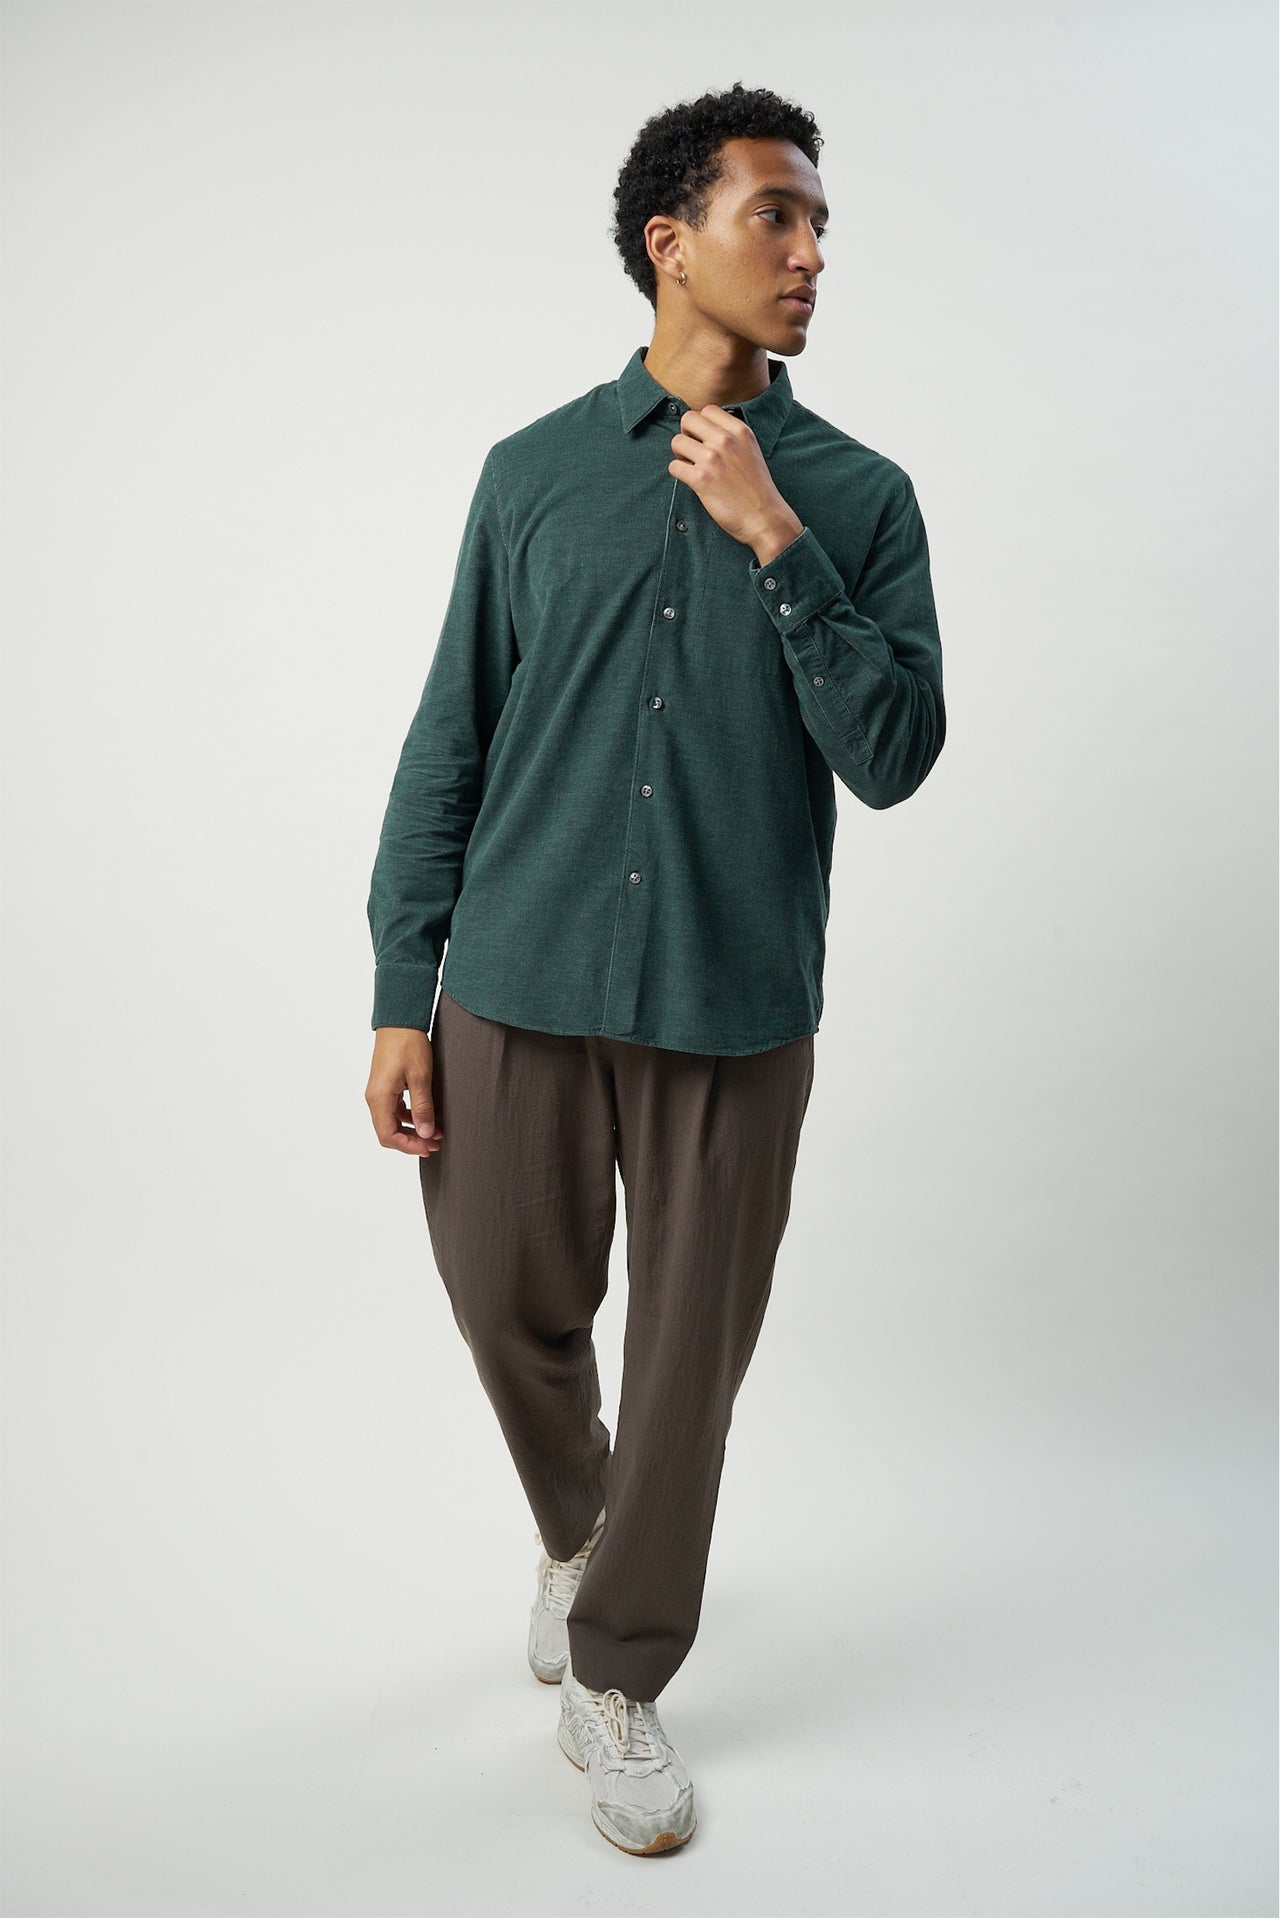 Feel Good Shirt in a Moss Green Japanese Corduroy Cotton